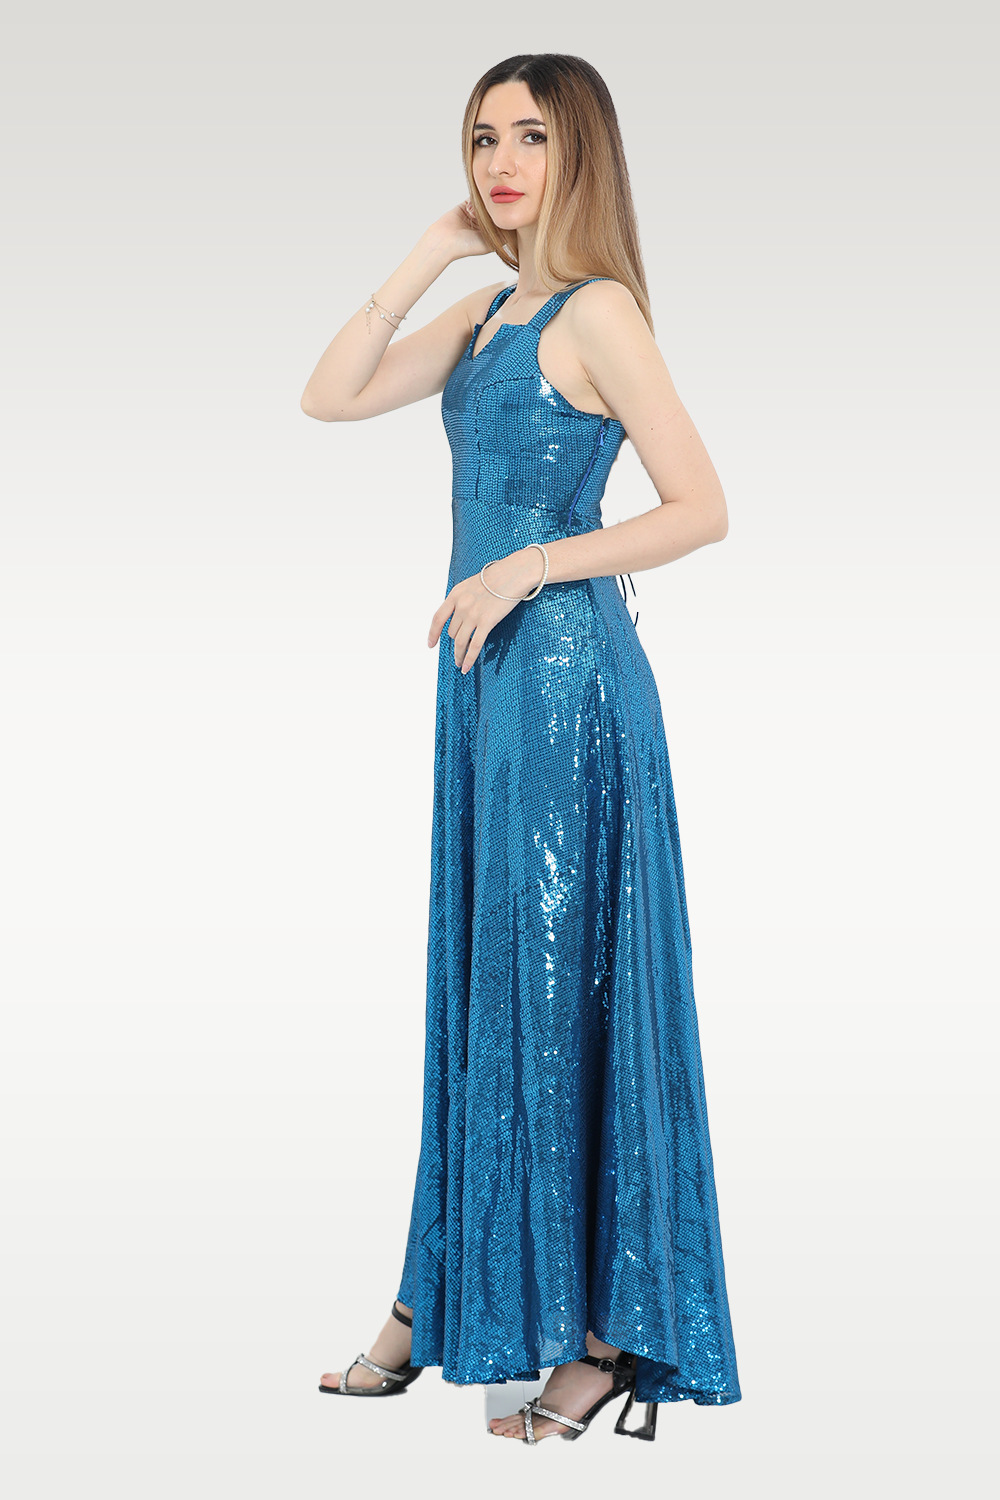 Alish Blue Glittery Gown